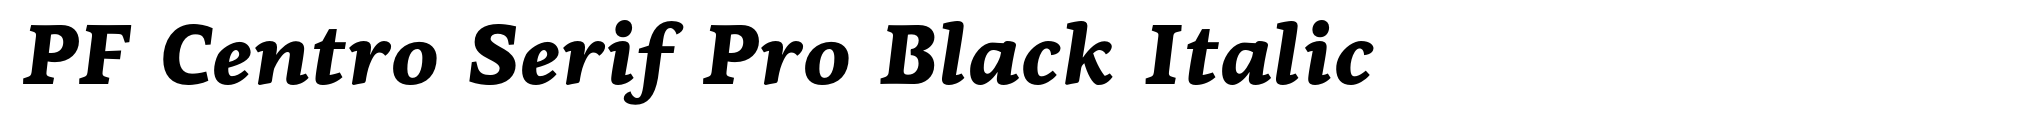 PF Centro Serif Pro Black Italic image